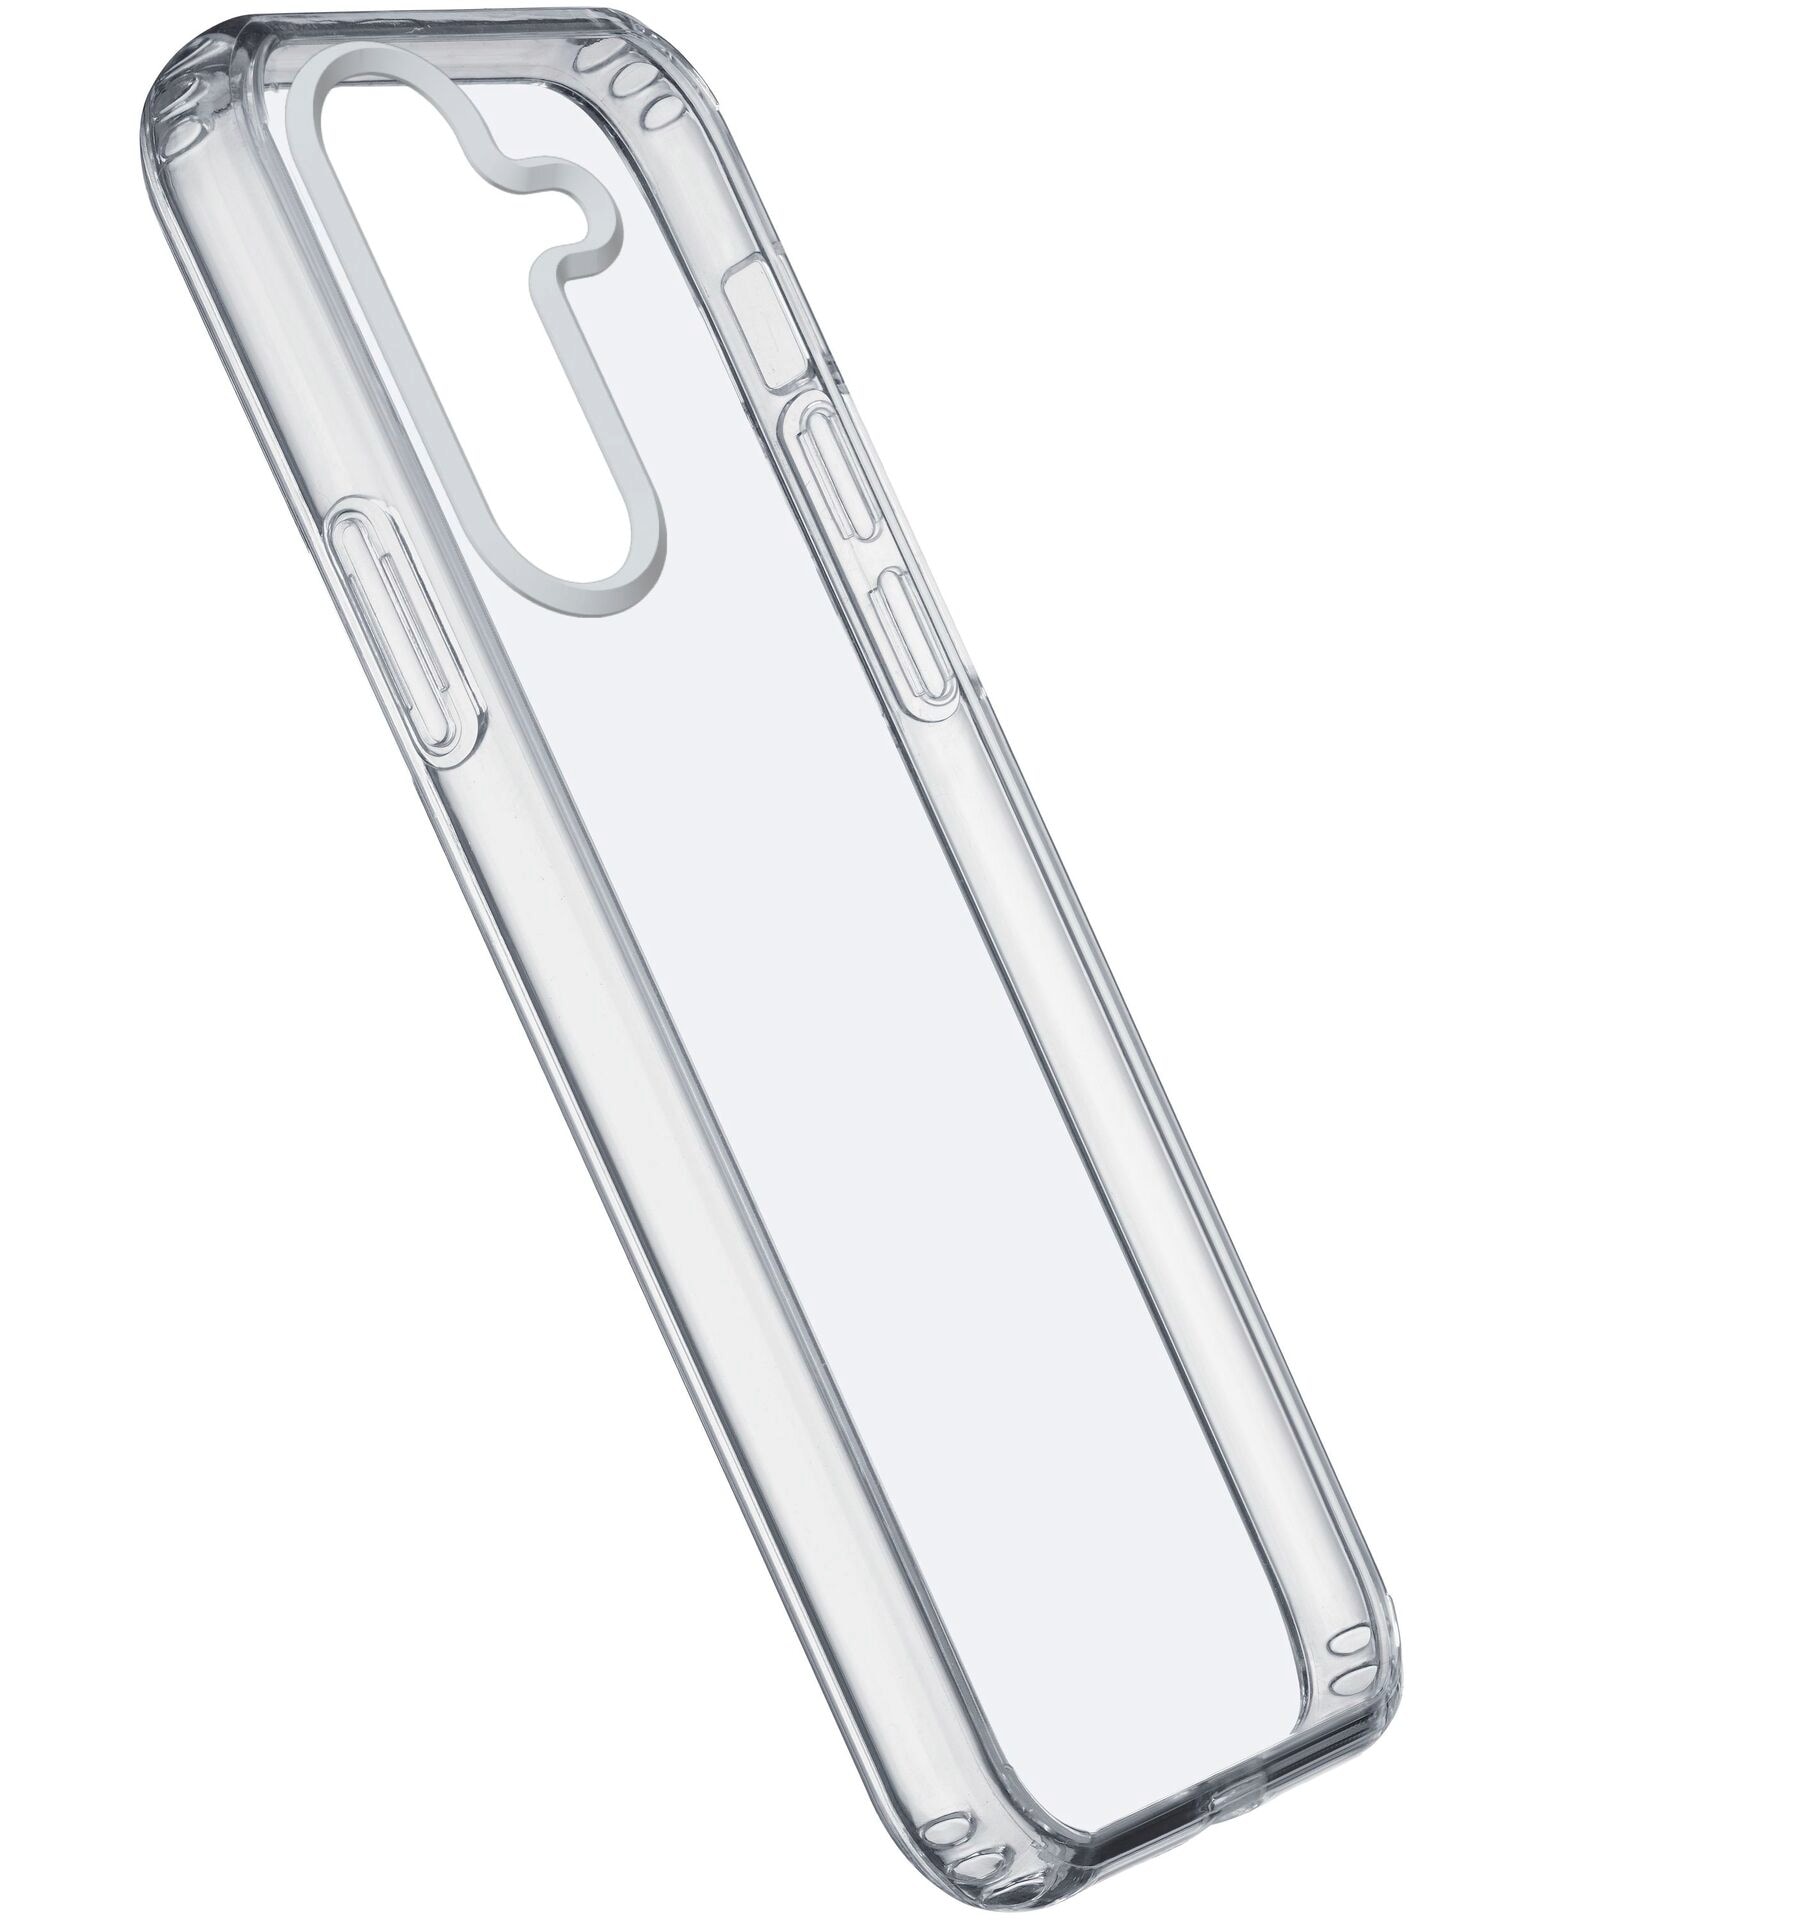 Cellularline Handyhülle »Clear Strong Case für Samsung Galaxy S24«, Handycover Backcover Schutzhülle Handyschutzhülle stoßfest kratzfest